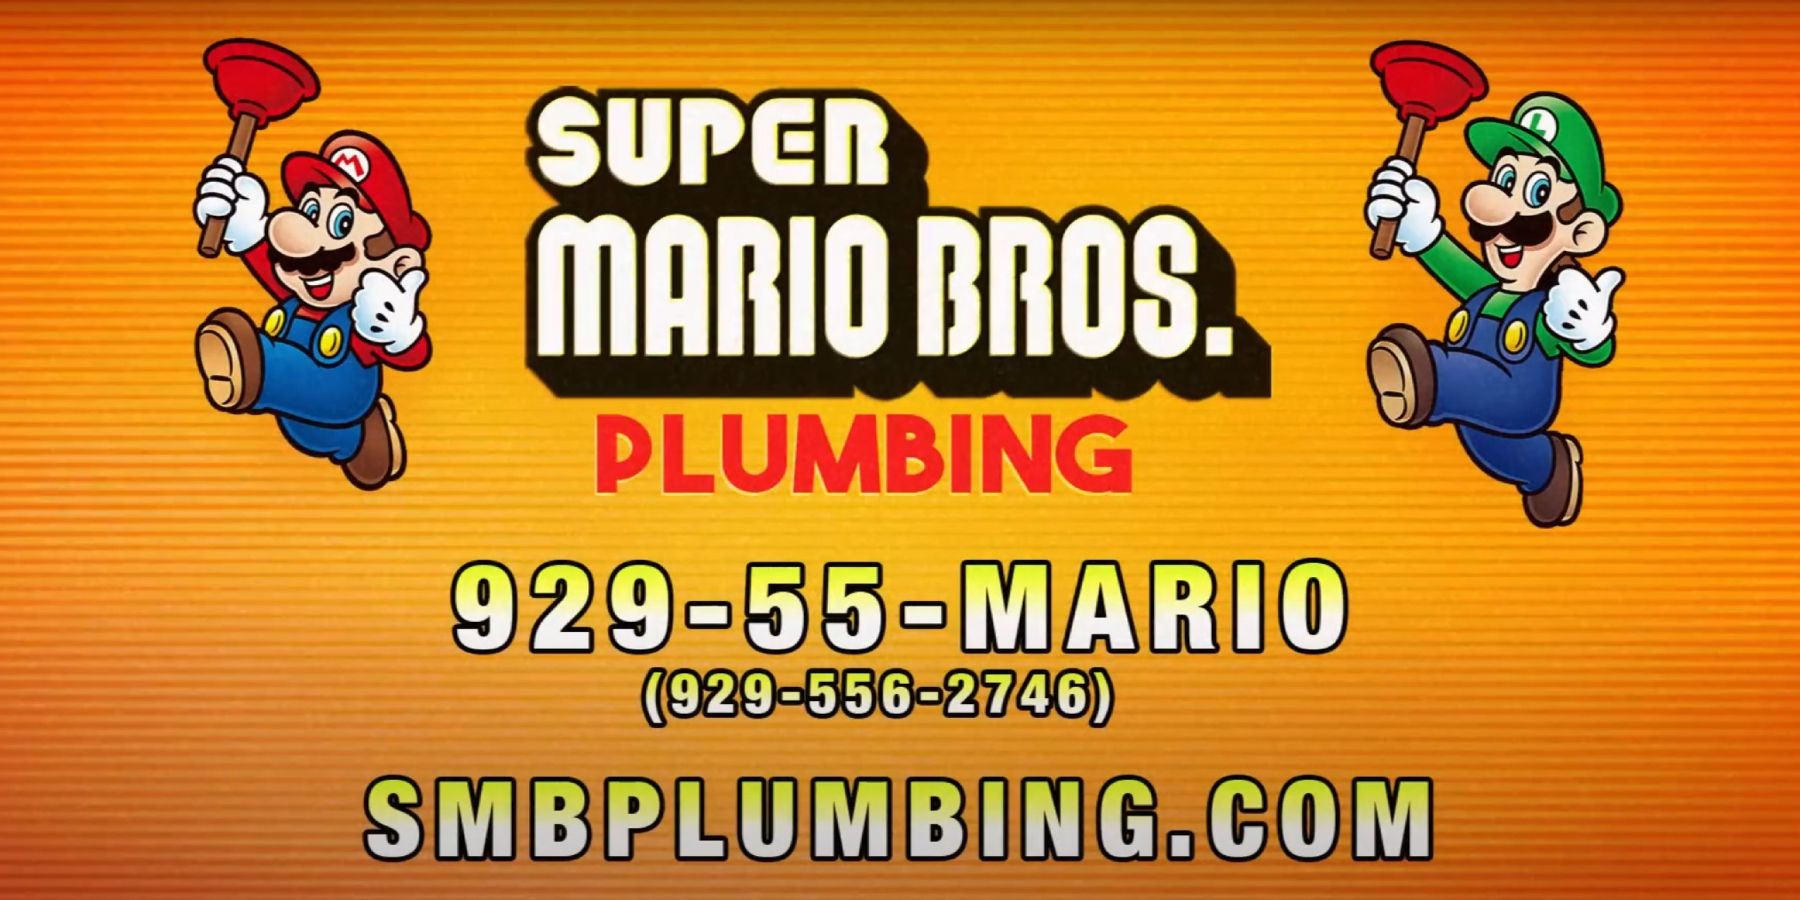 Super Mario Bros. Plumbing flyer in Mario 3 art style